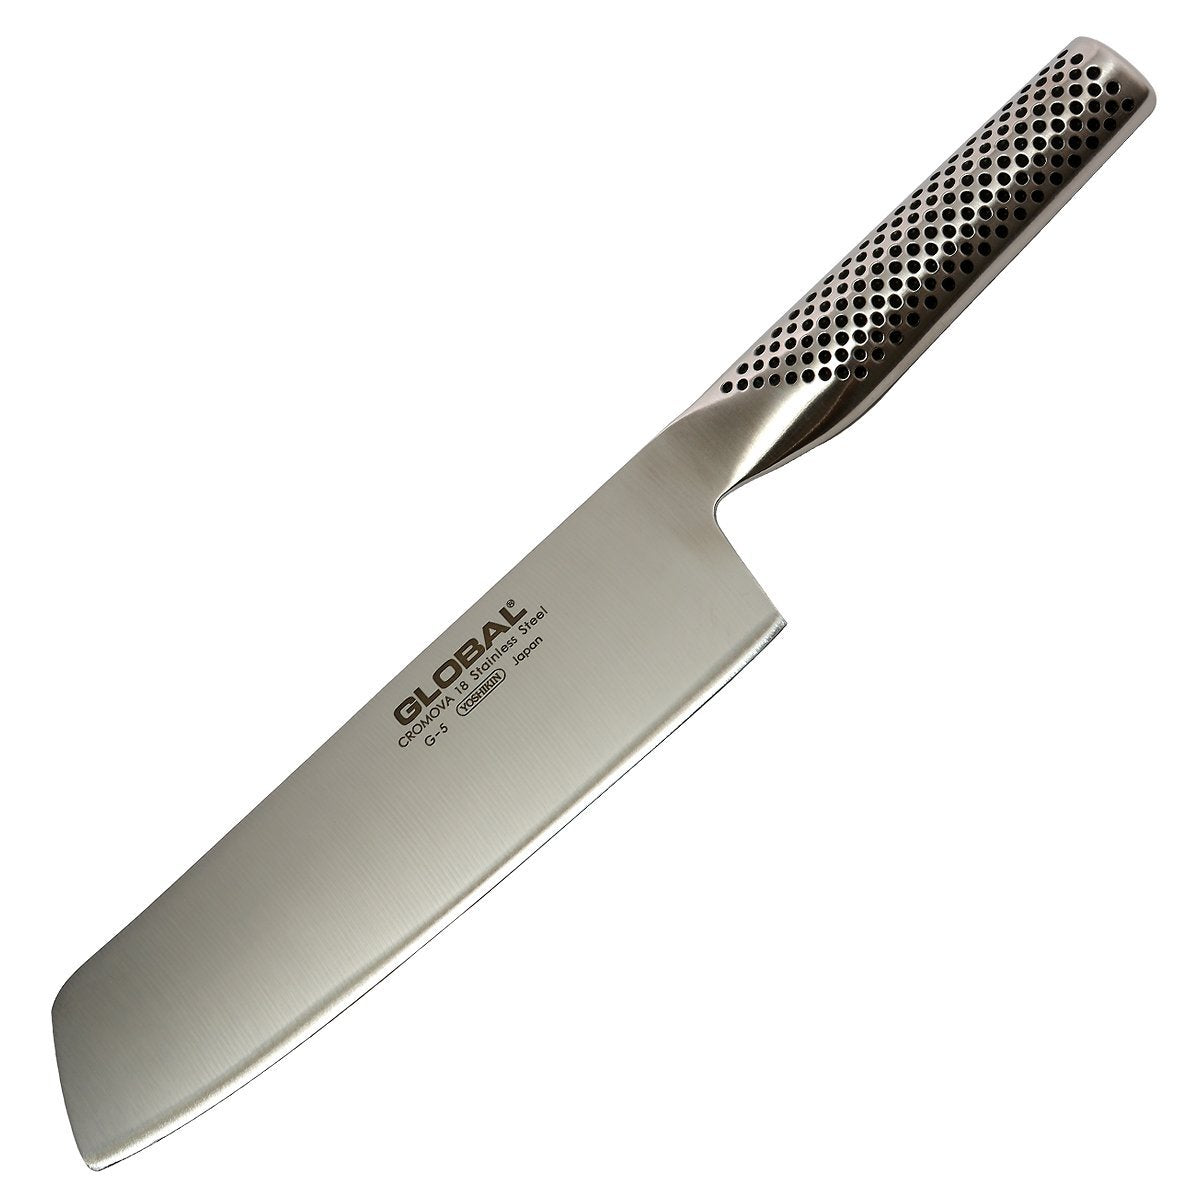 Global G-5, 7-inch, 18cm Vegetable Knife